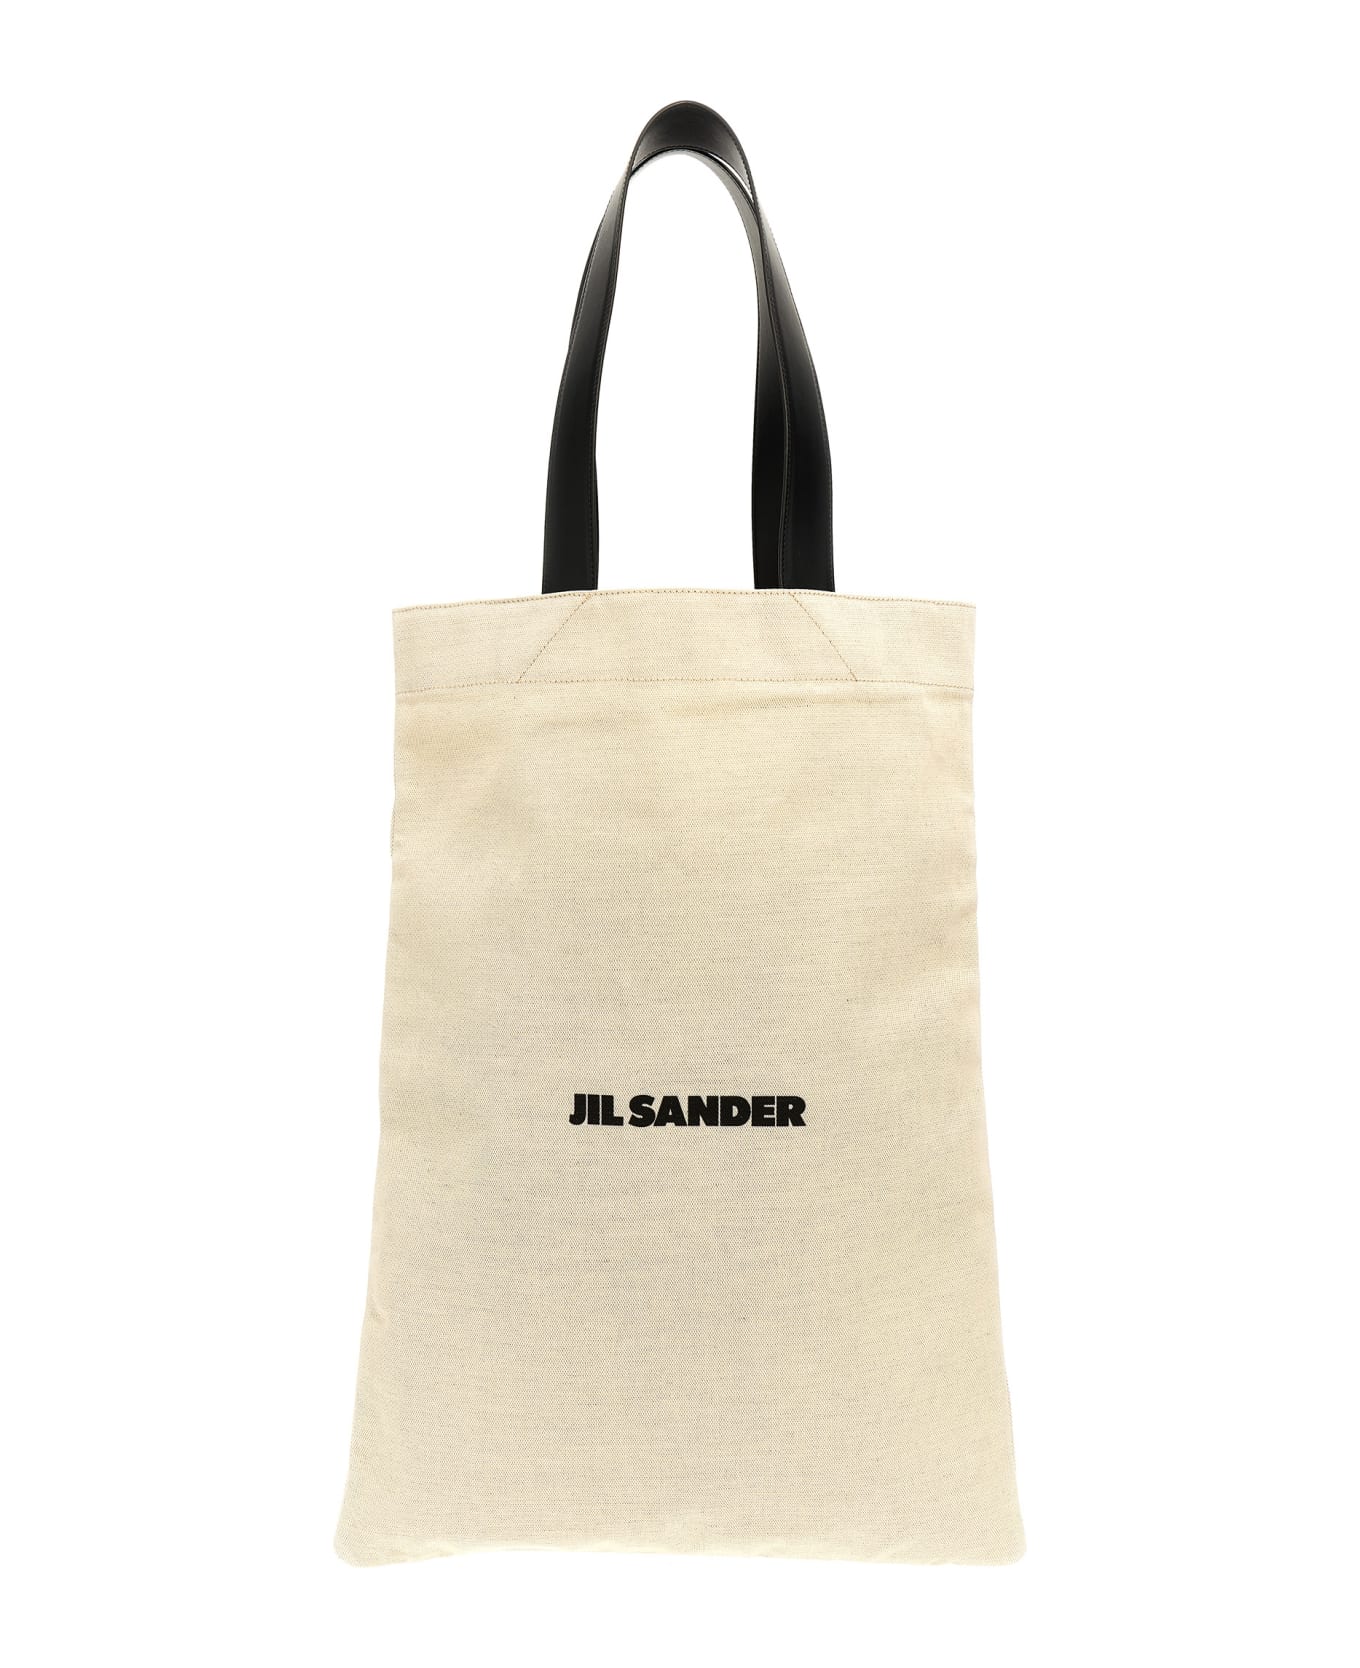 Jil Sander 'flat Shopper' Large Shopping Bag - White/Black